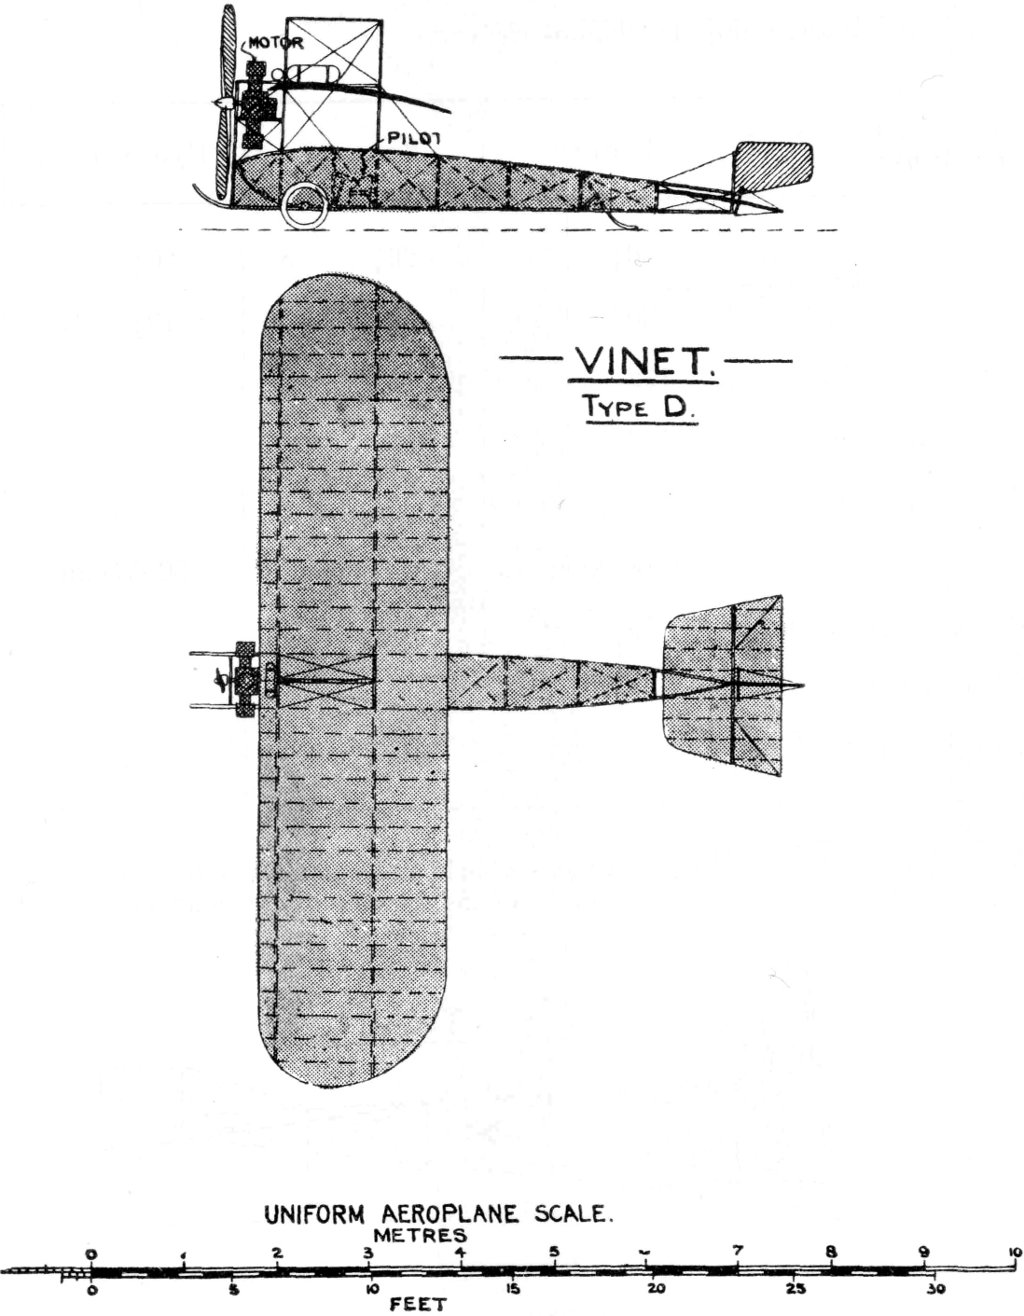 VINET. Type D. Uniform Aeroplane Scale